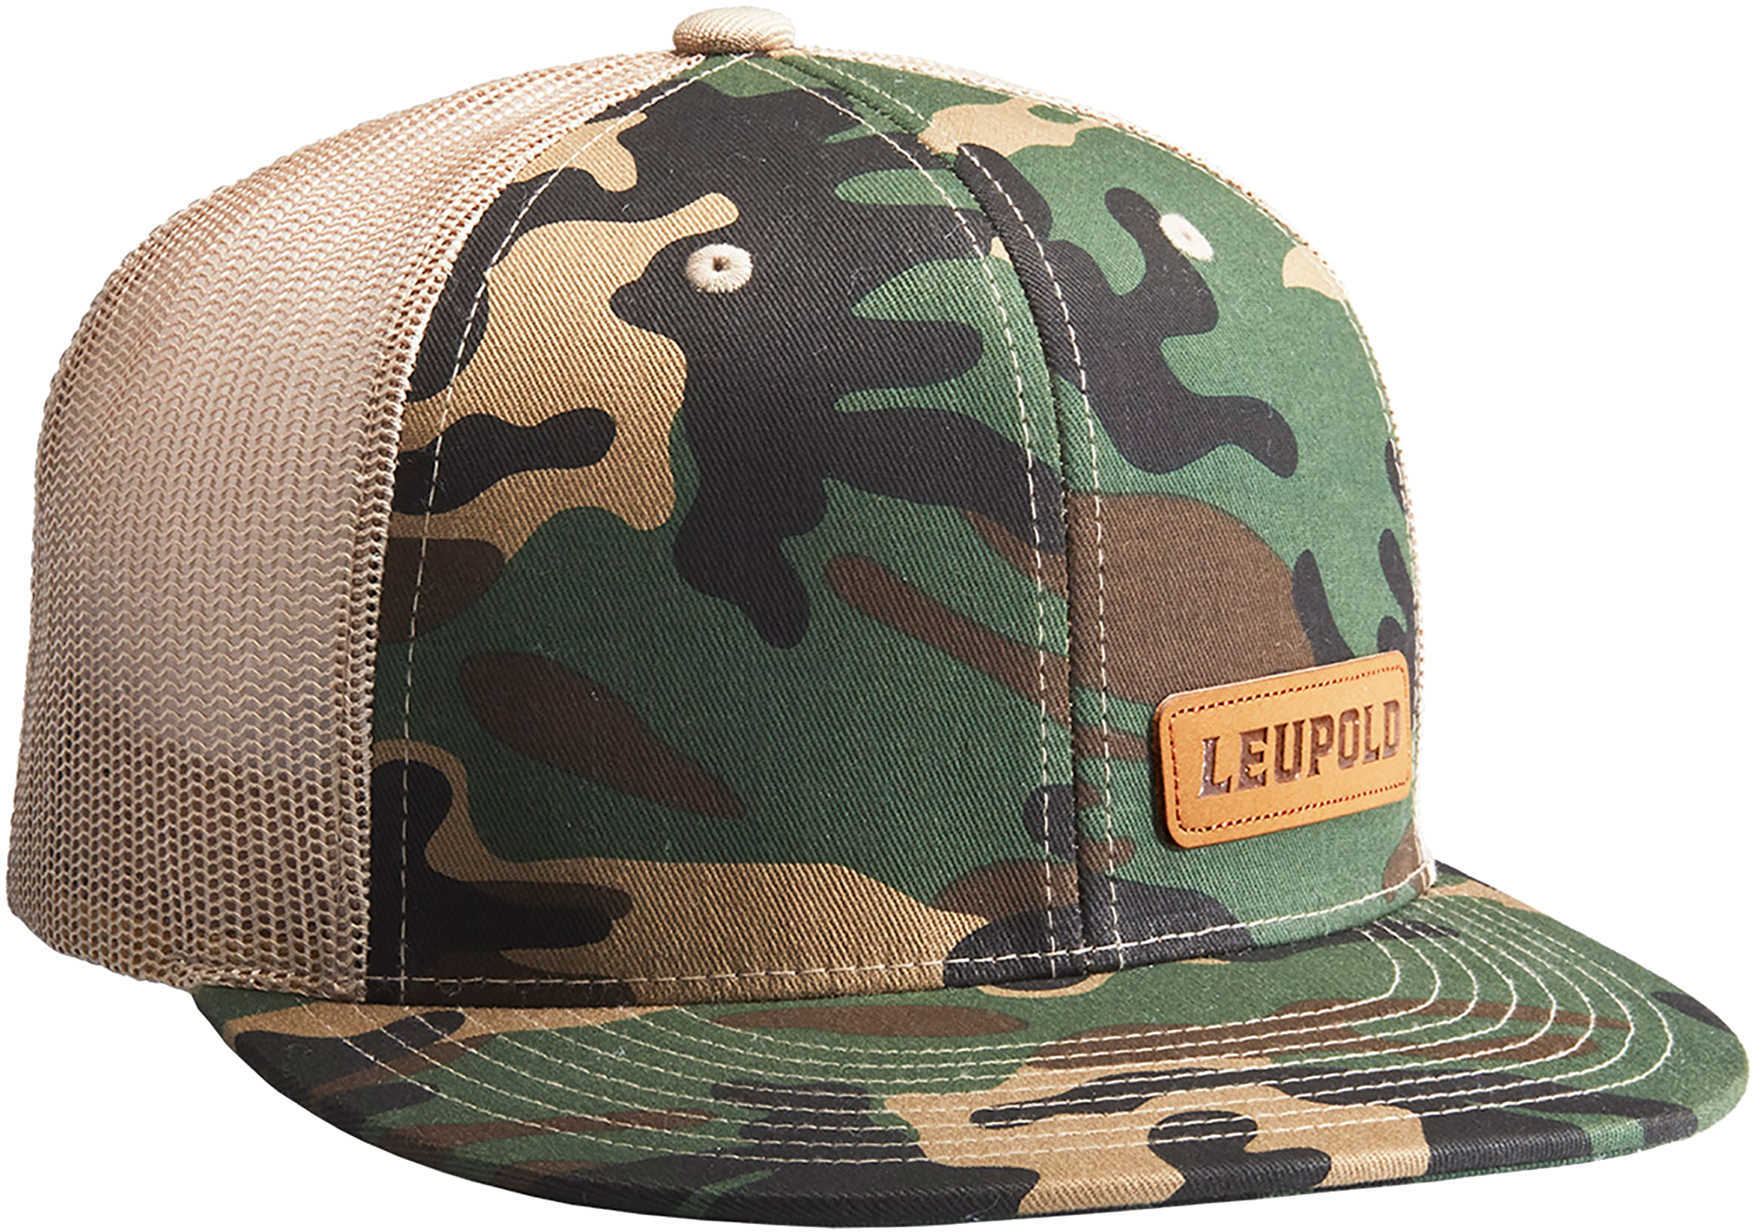 Leupold Hat "Leather Patch" Camo/Khaki Os